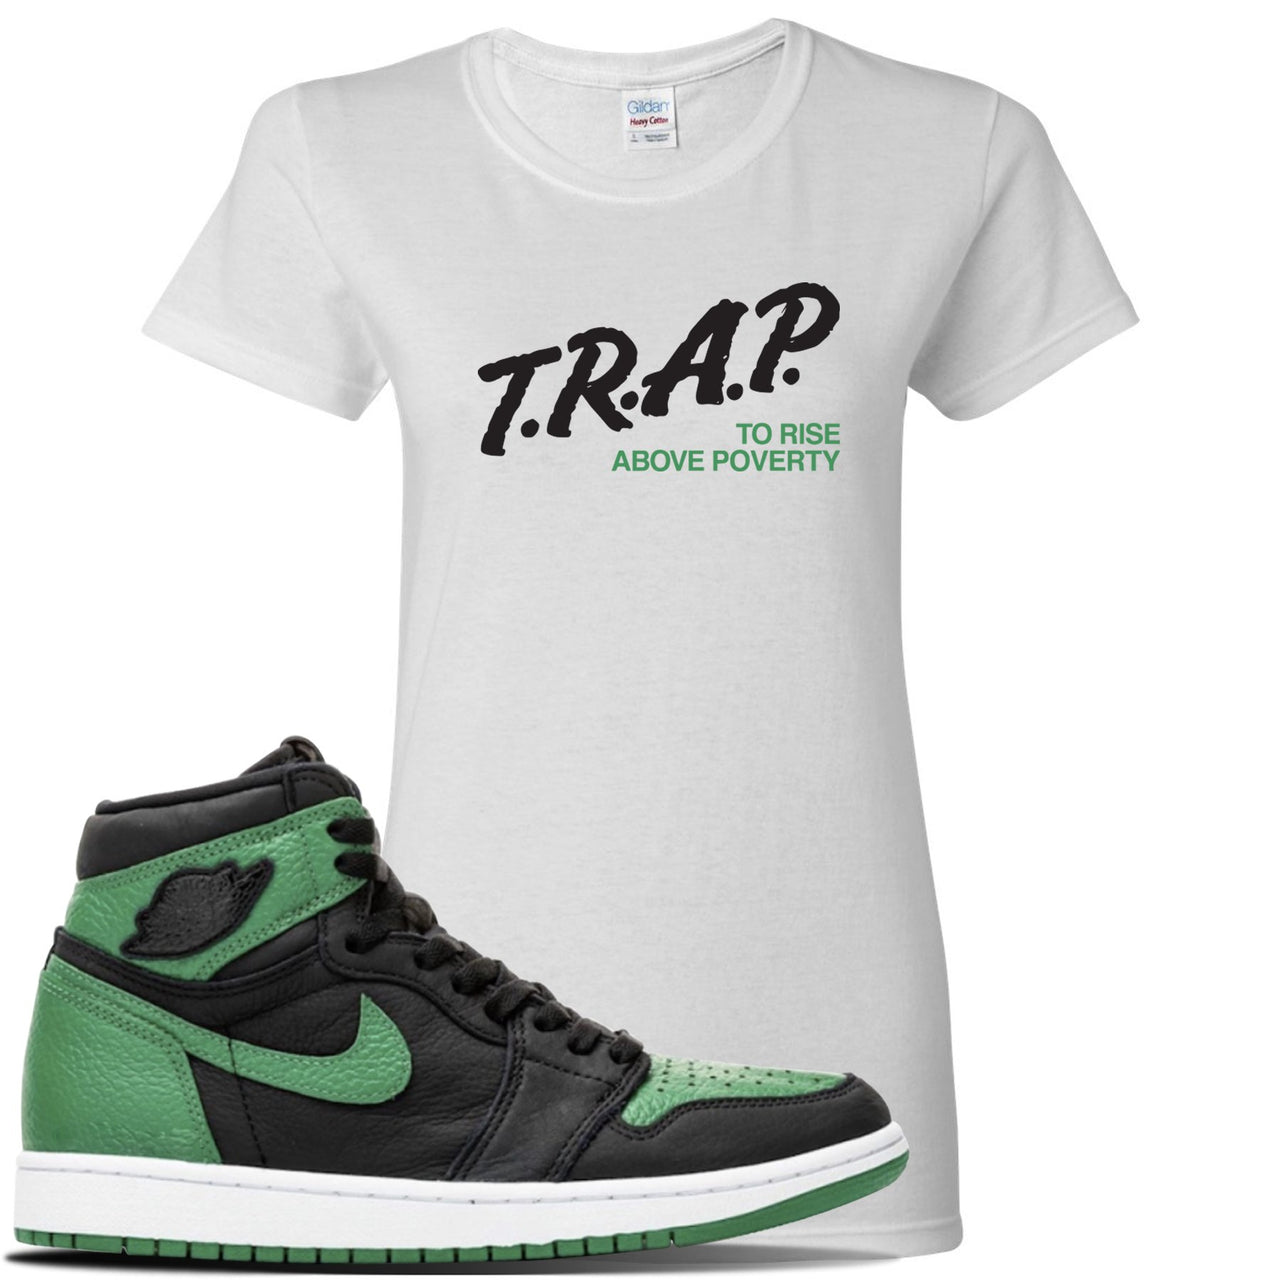 Jordan 1 Retro High OG Pine Green Gym Sneaker White Women's T Shirt | Women's Tees to match Air Jordan 1 Retro High OG Pine Green Gym Shoes | Trap To Rise Above Poverty